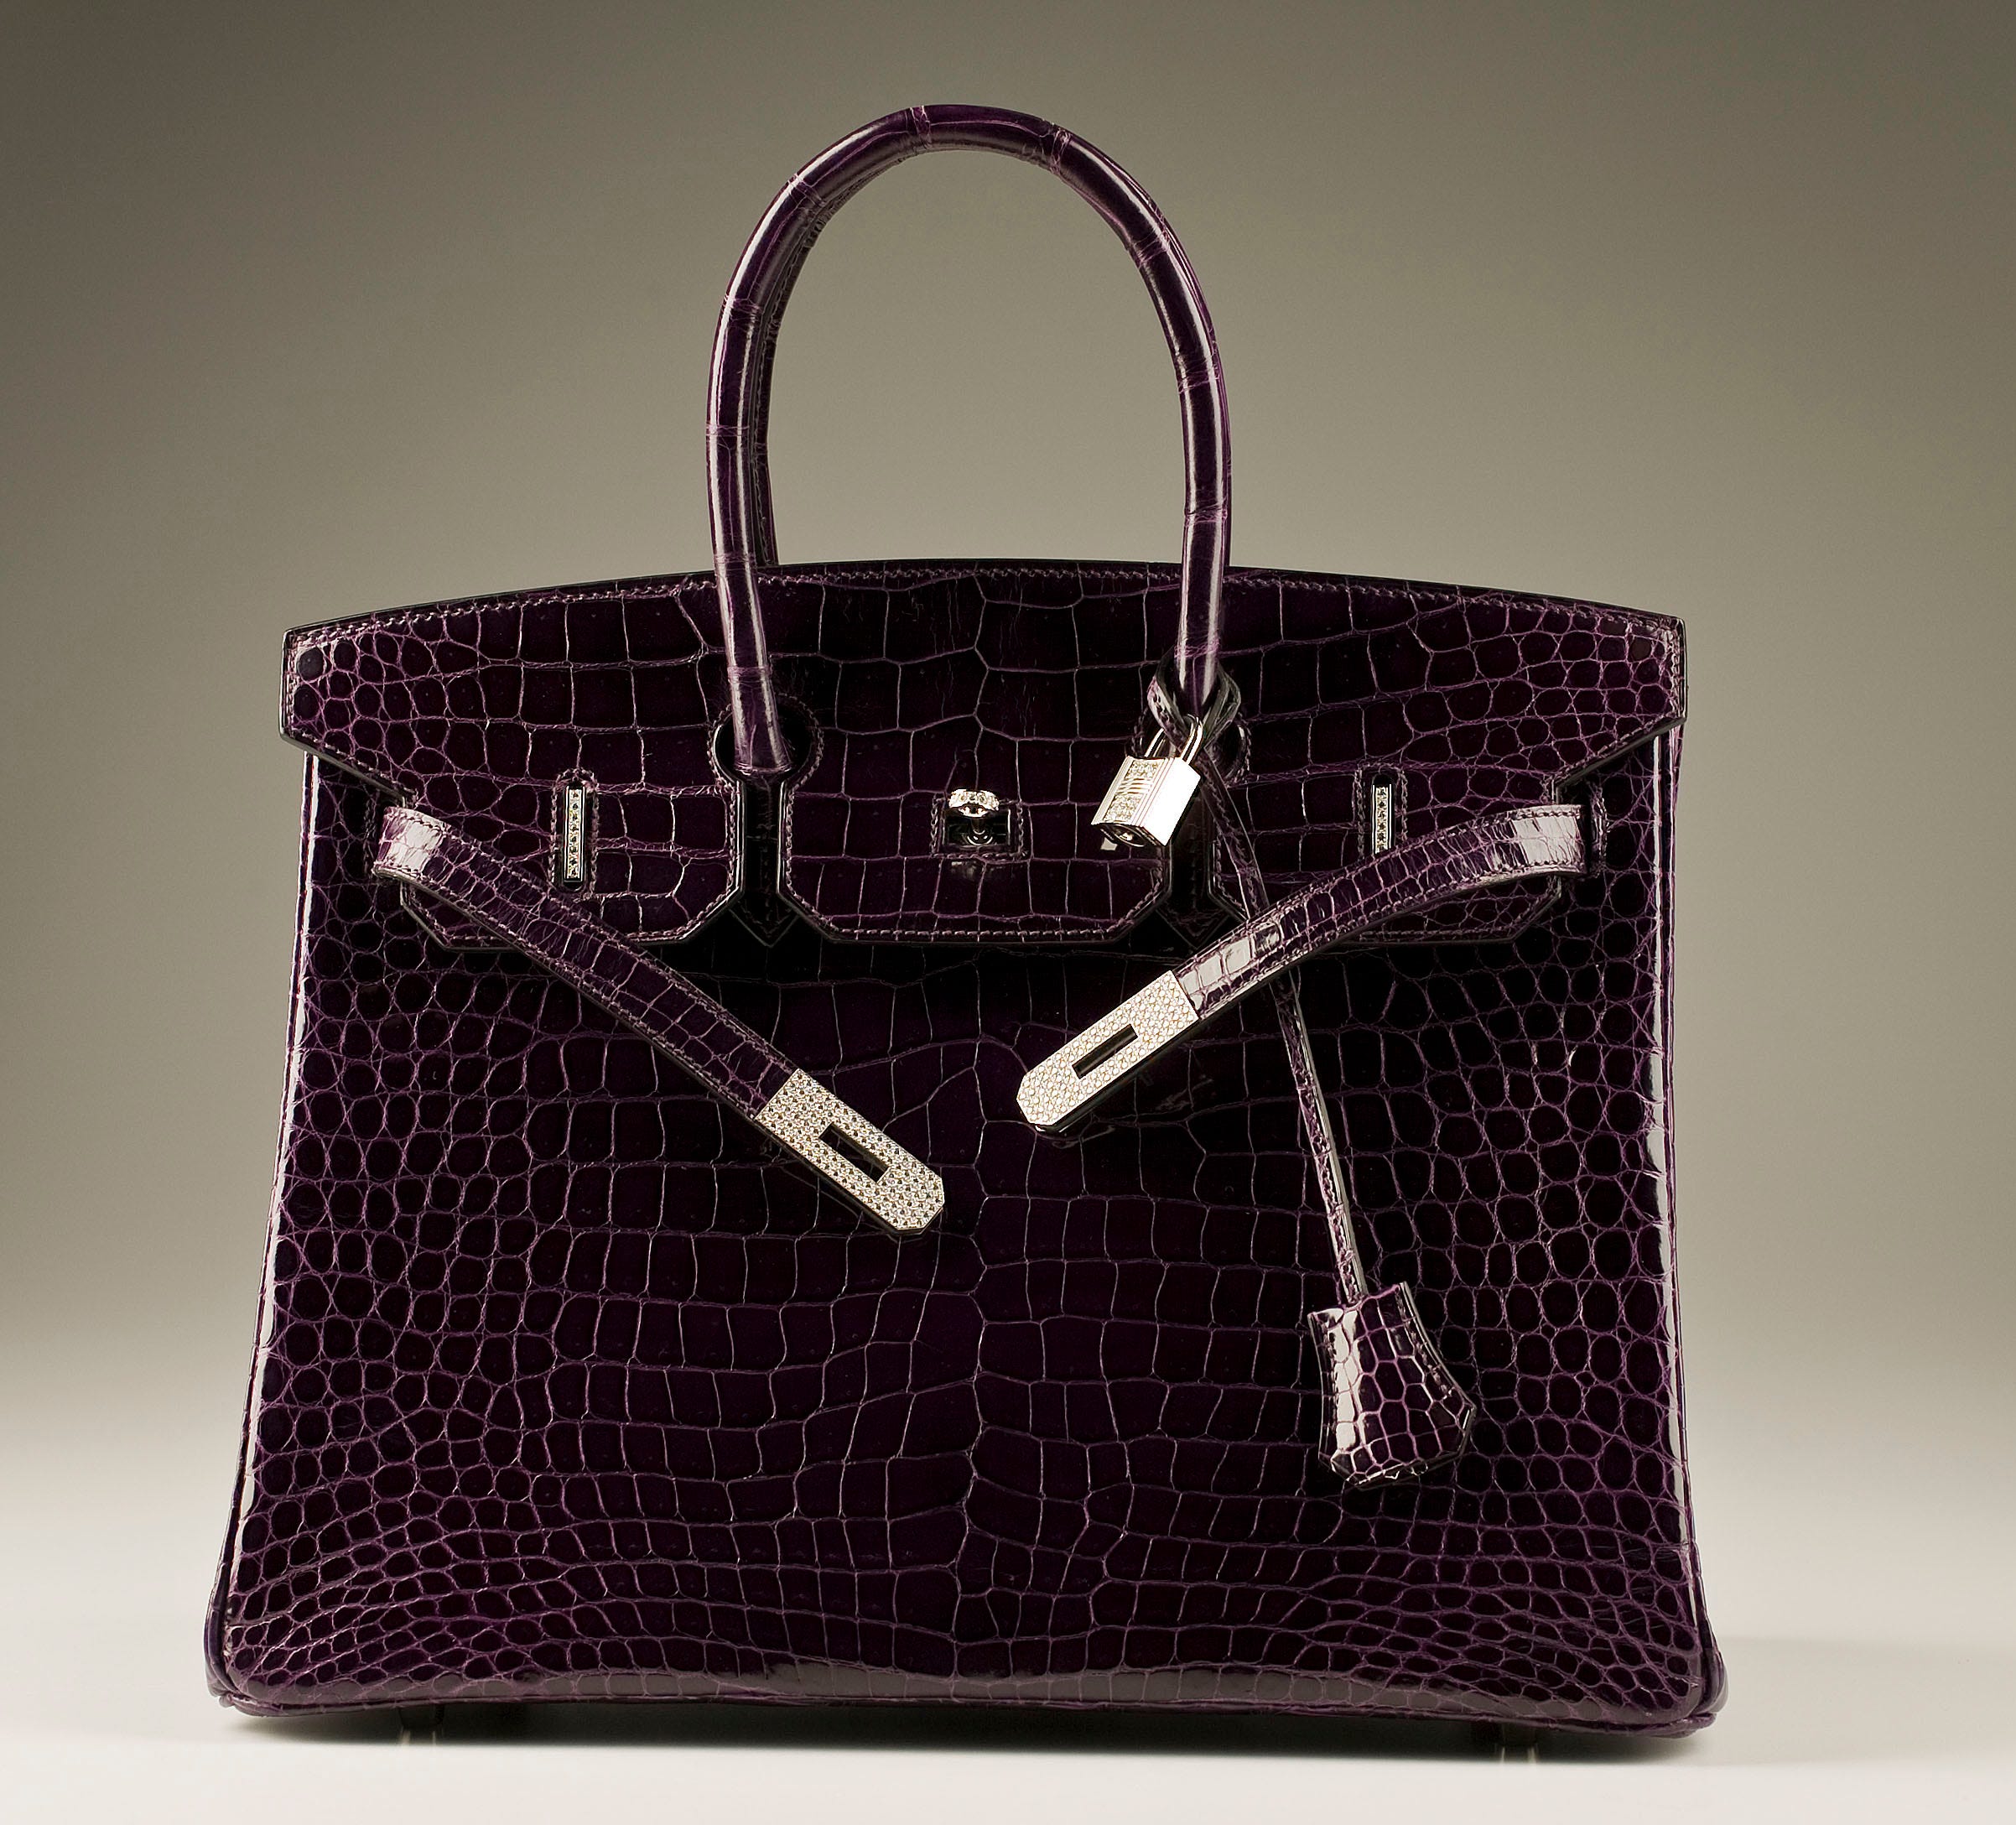 A gold and diamond-encrusted Hermès Birkin bag containing 9